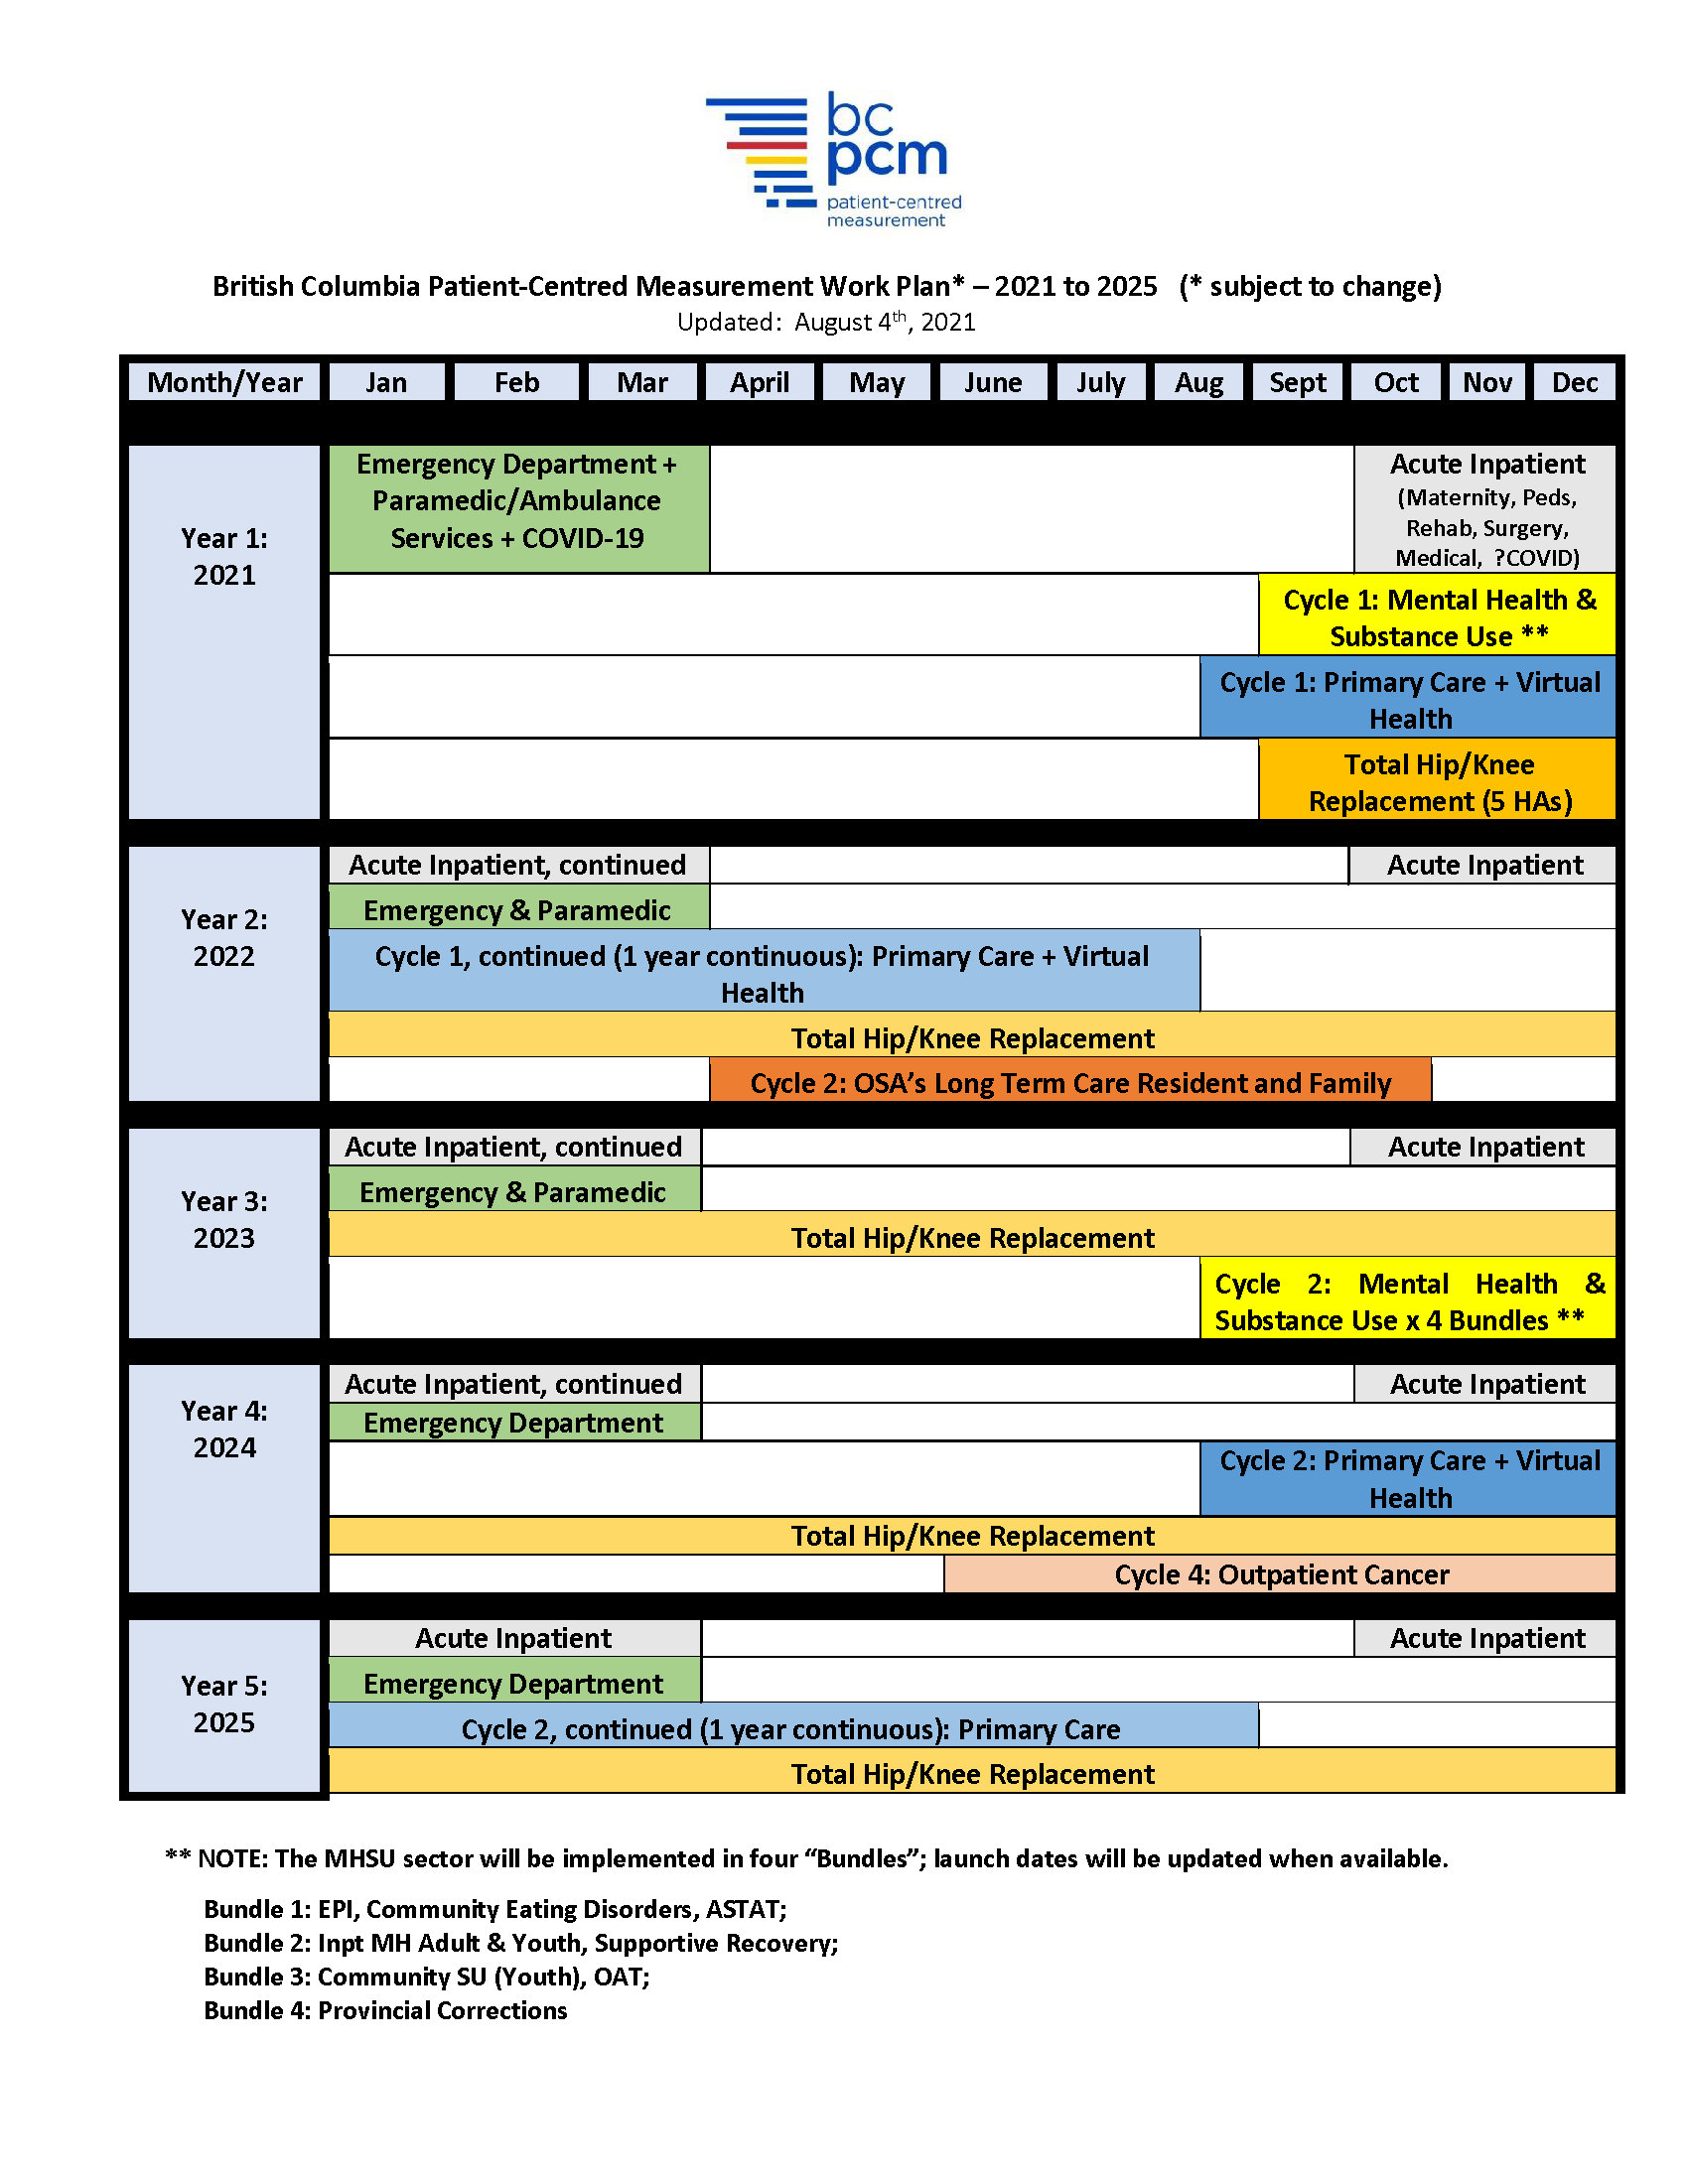 Survay Schedule